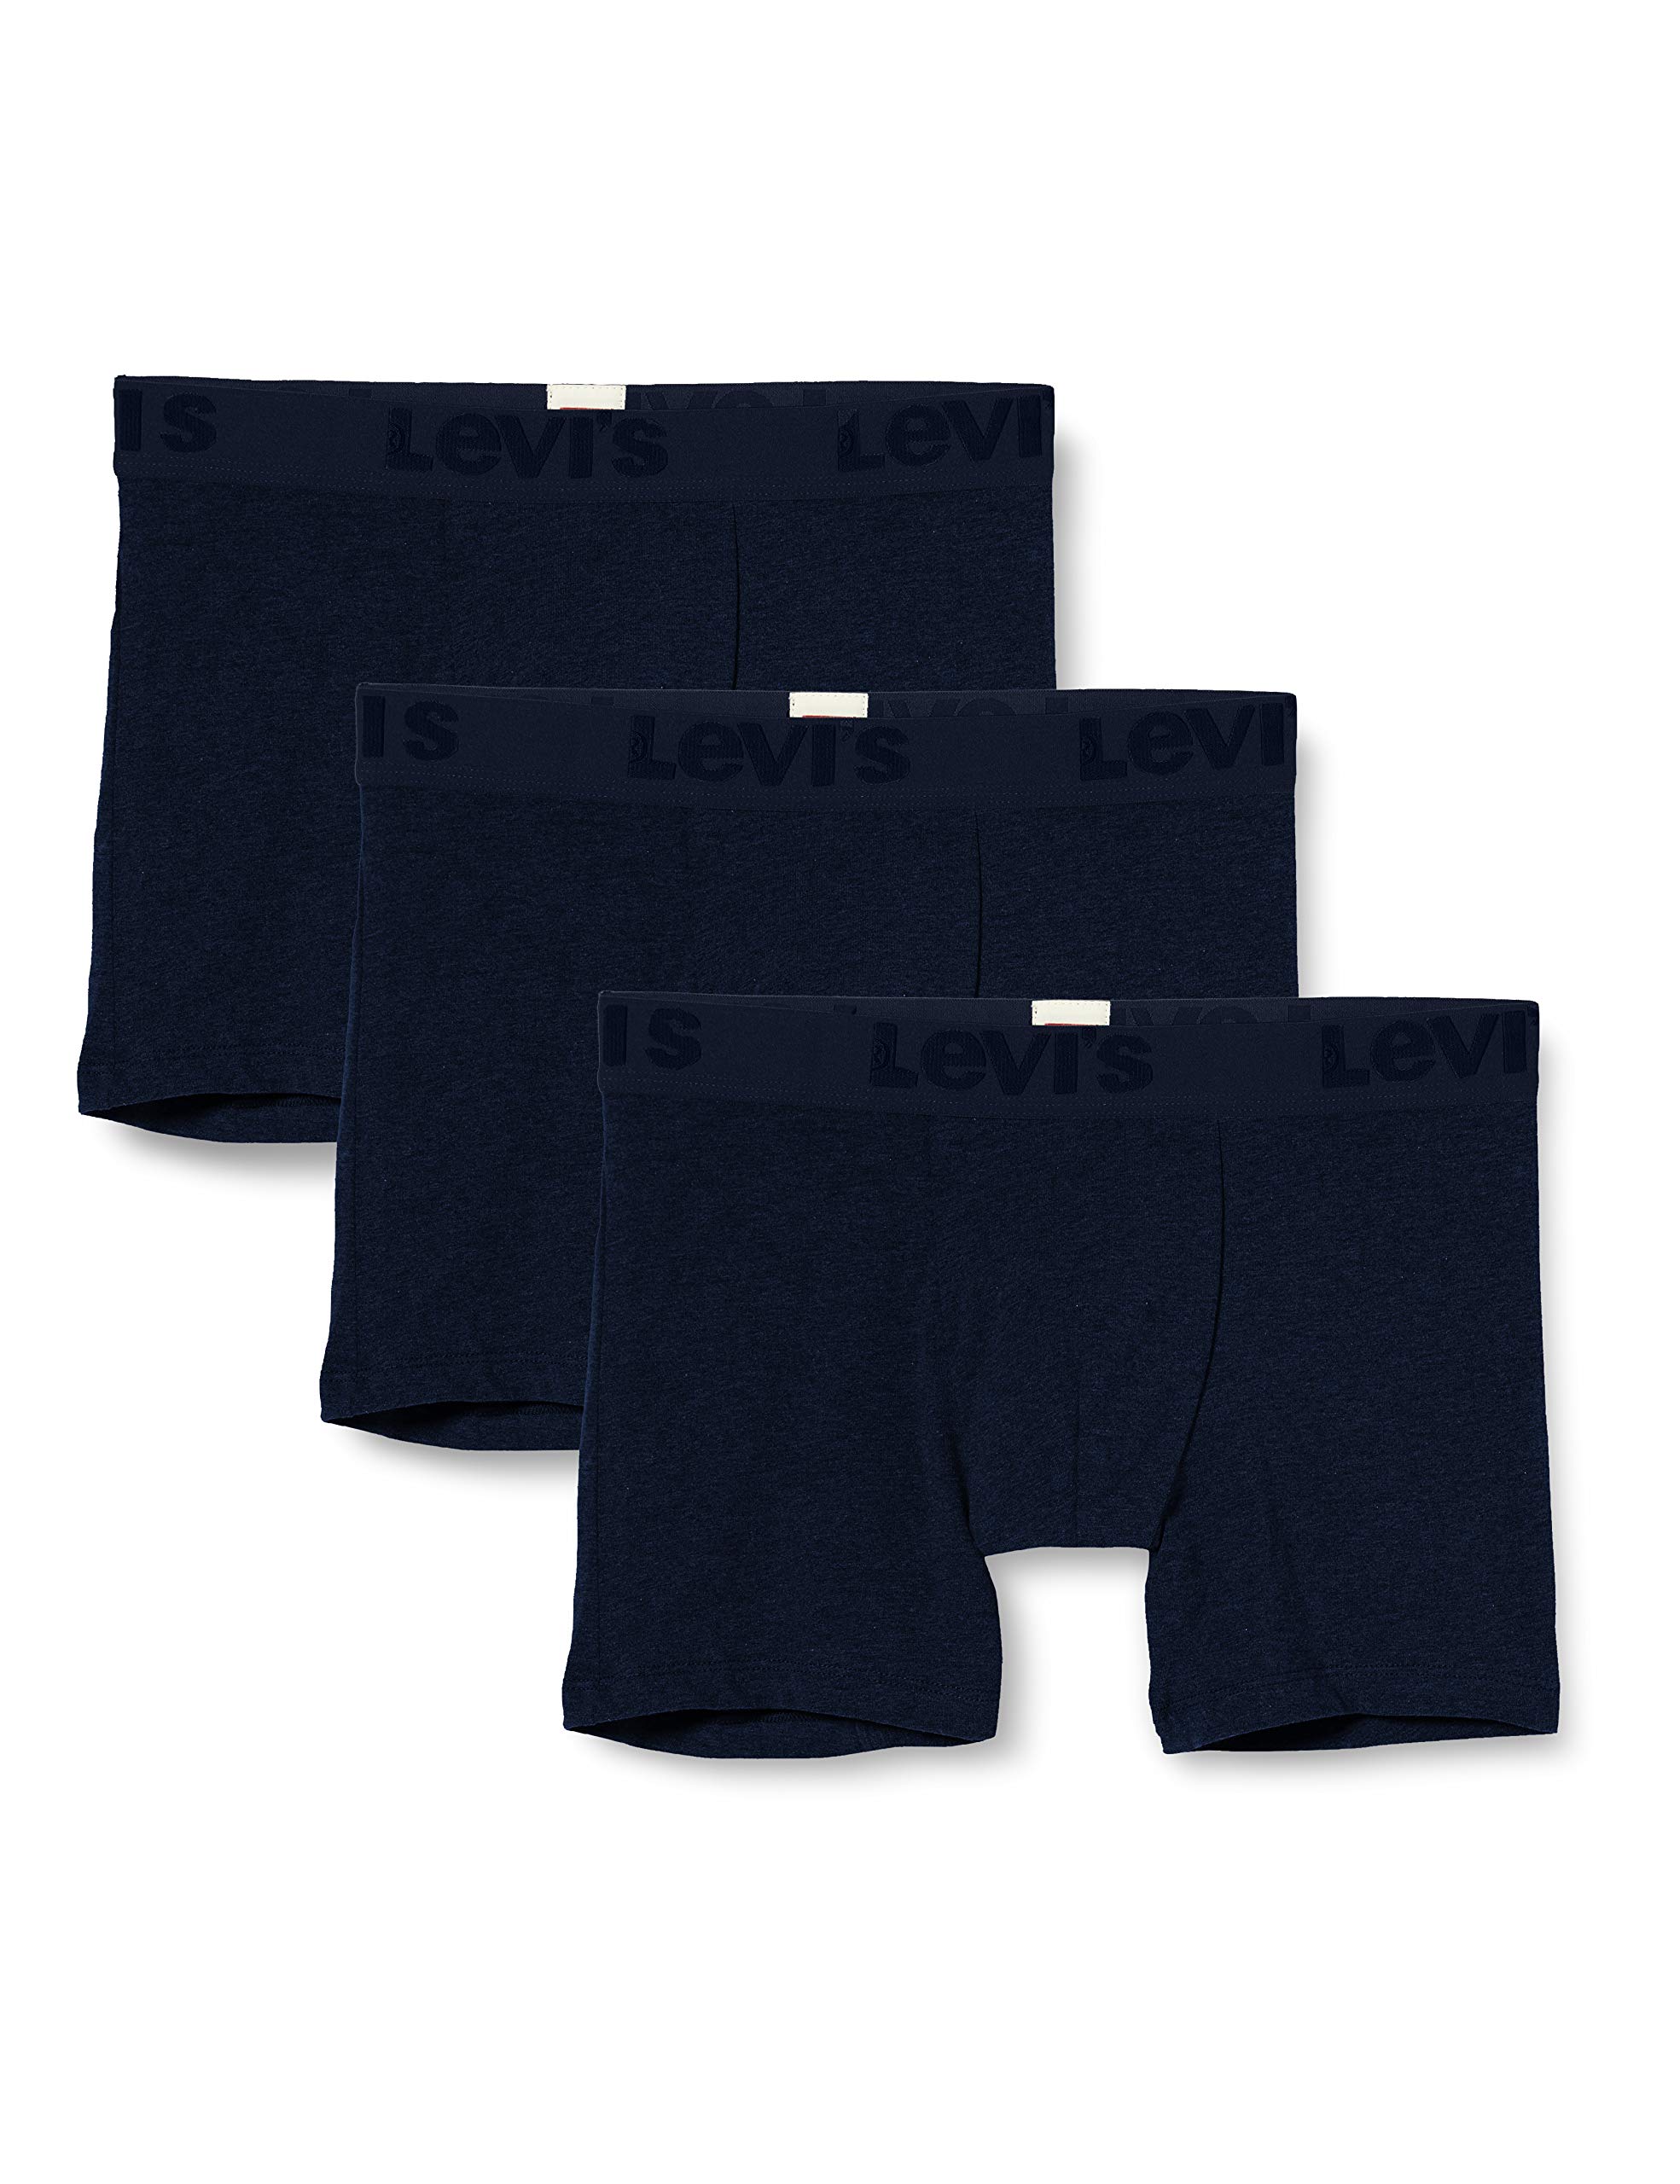 Levi's Herren Levi's Premium Men's Boxer Briefs (3 pack) Boxer Shorts, navy, S